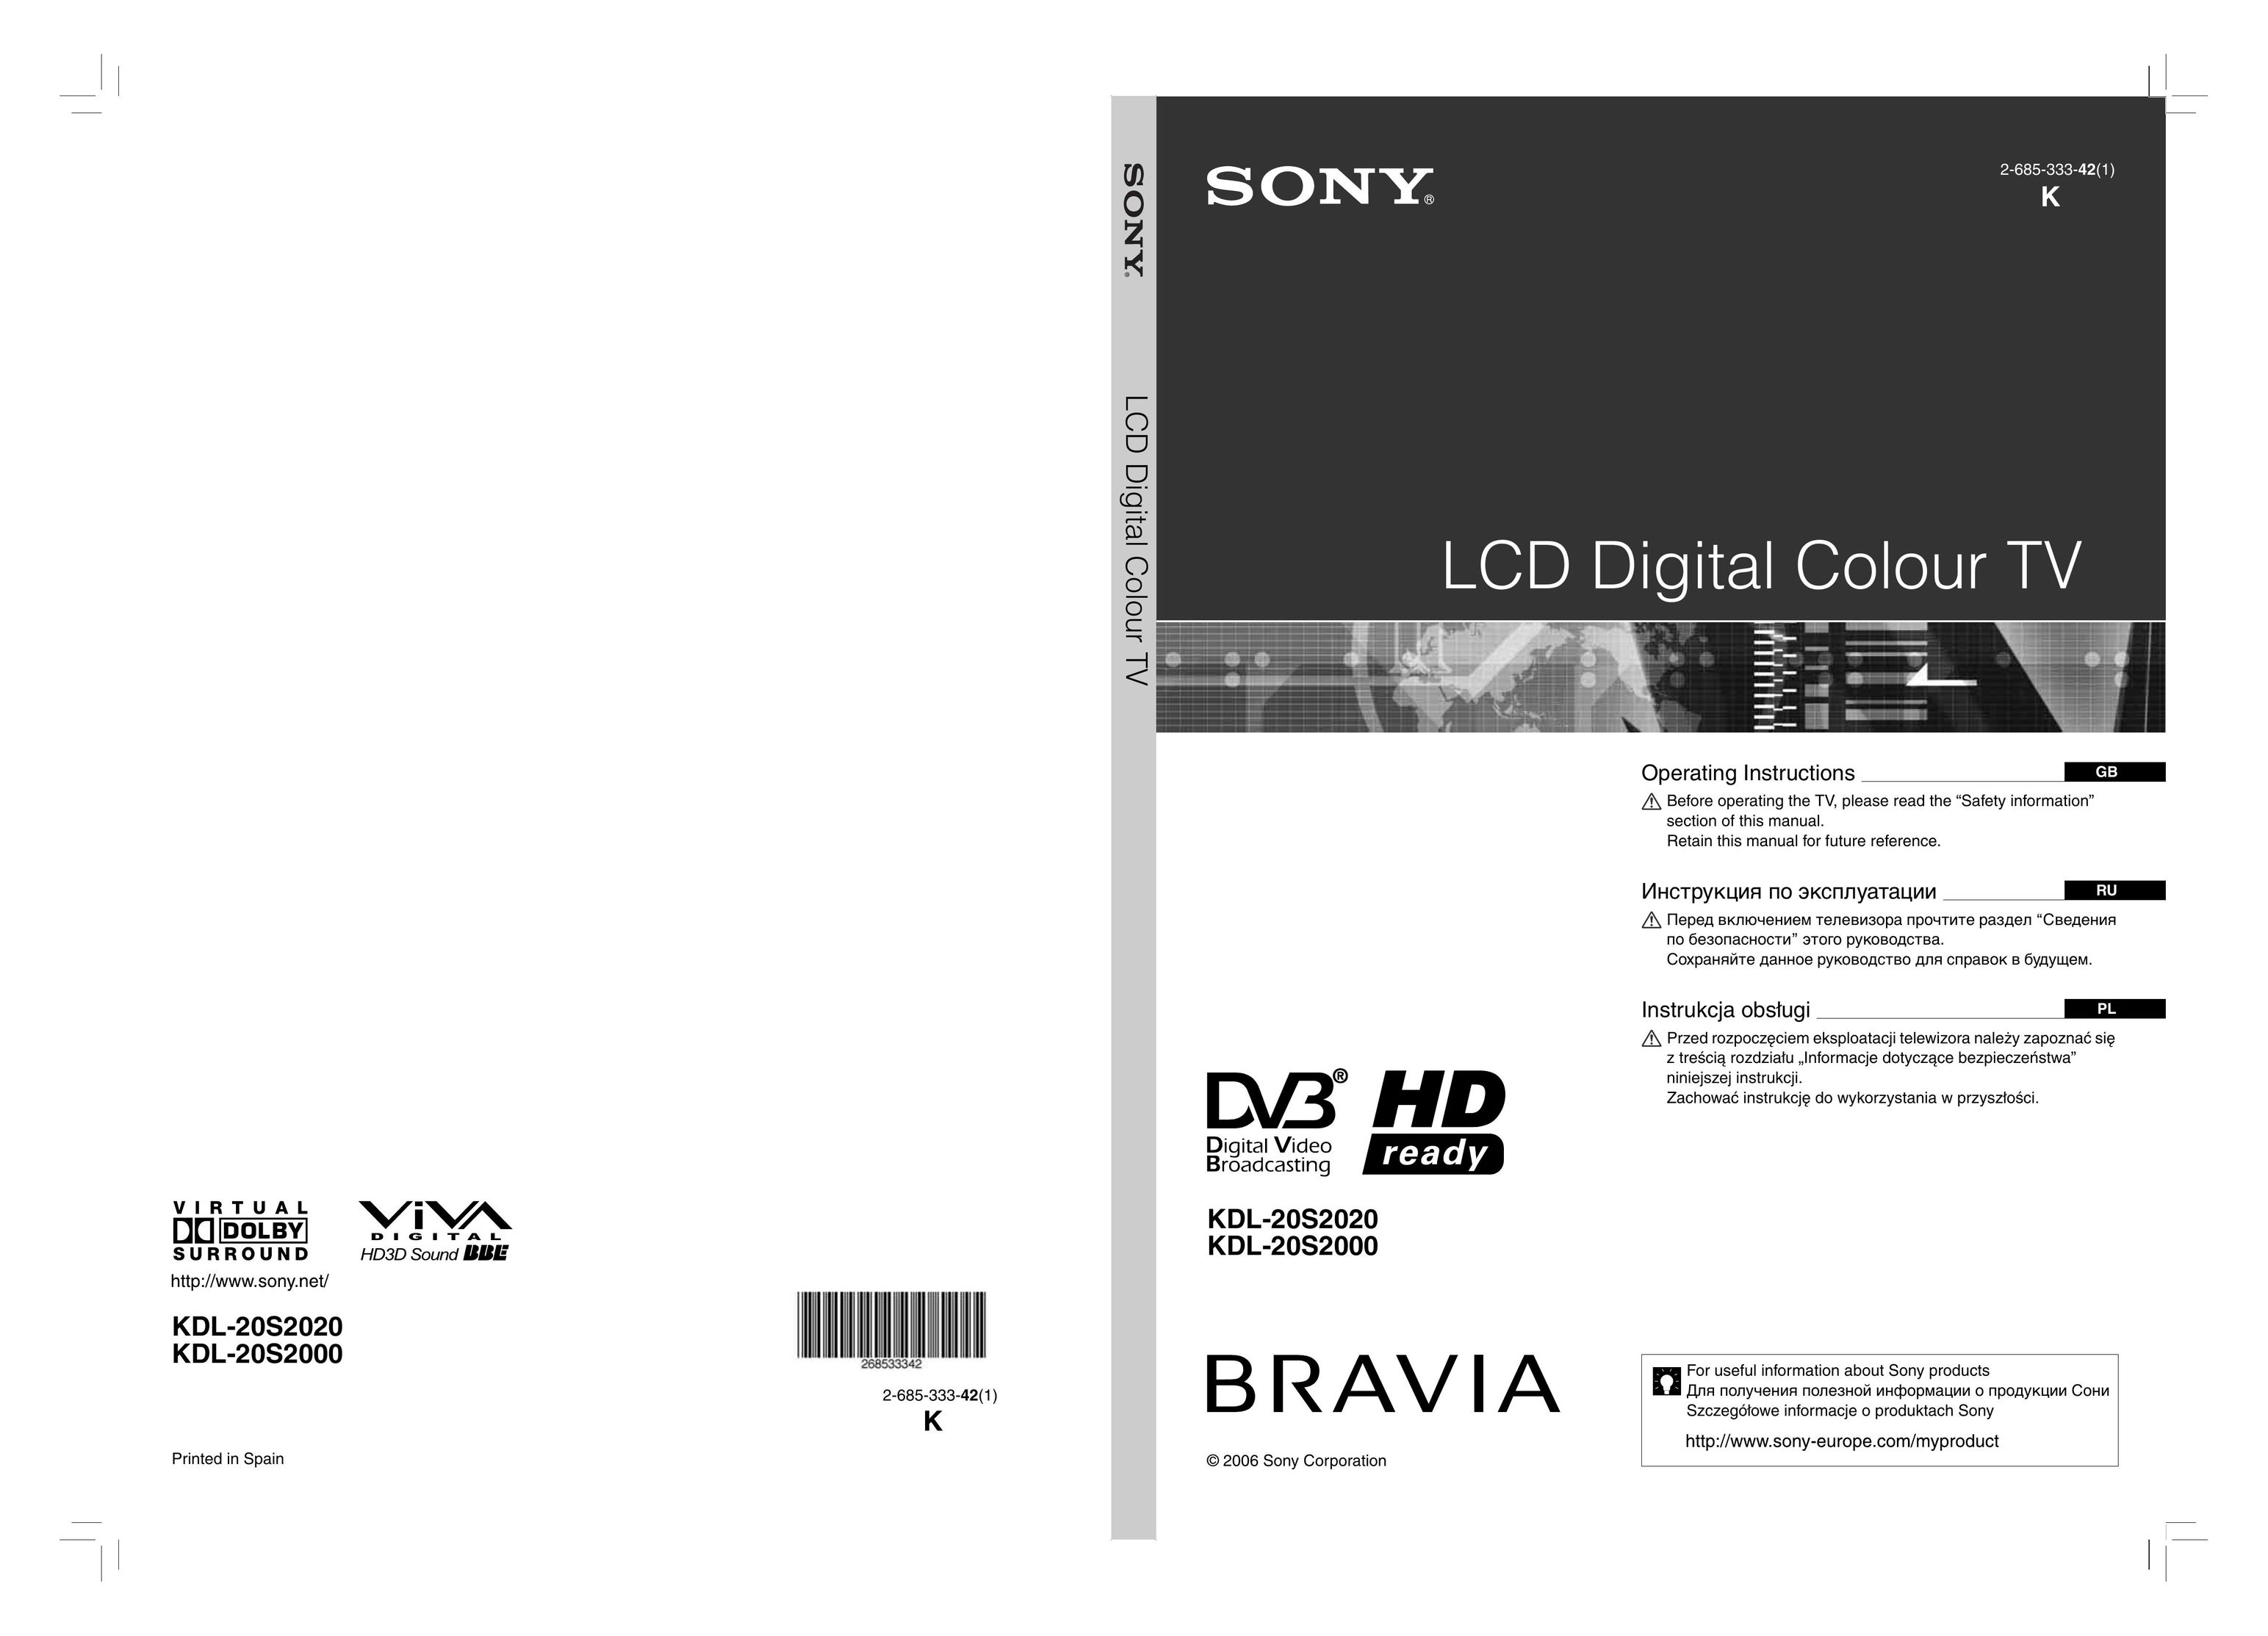 Sony KDL-20S2020 Barcode Reader User Manual